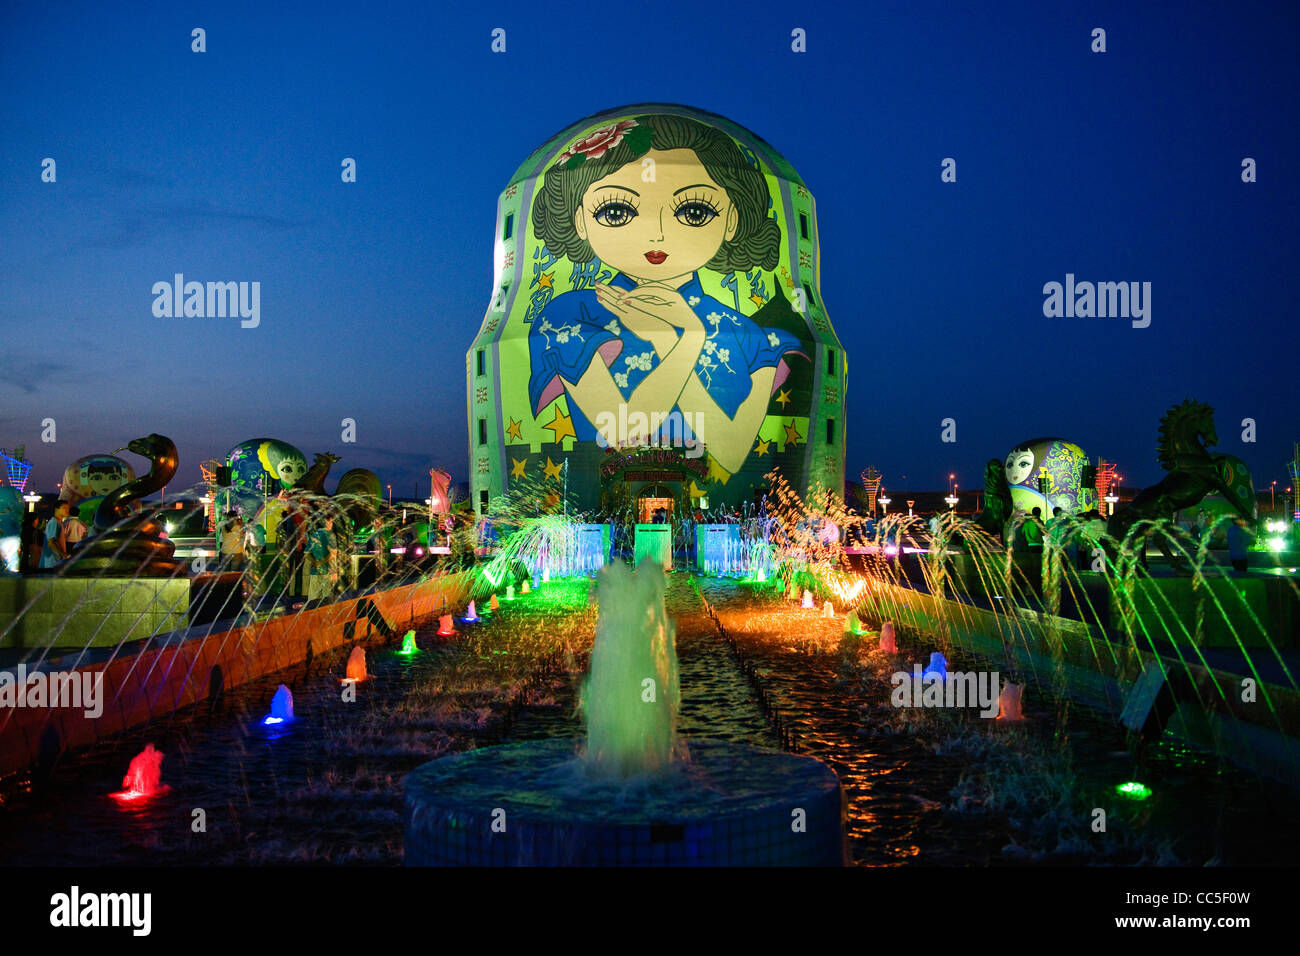 Nesting Dolls Square, Hulunbuir, Inner Mongolia, China Stock Photo